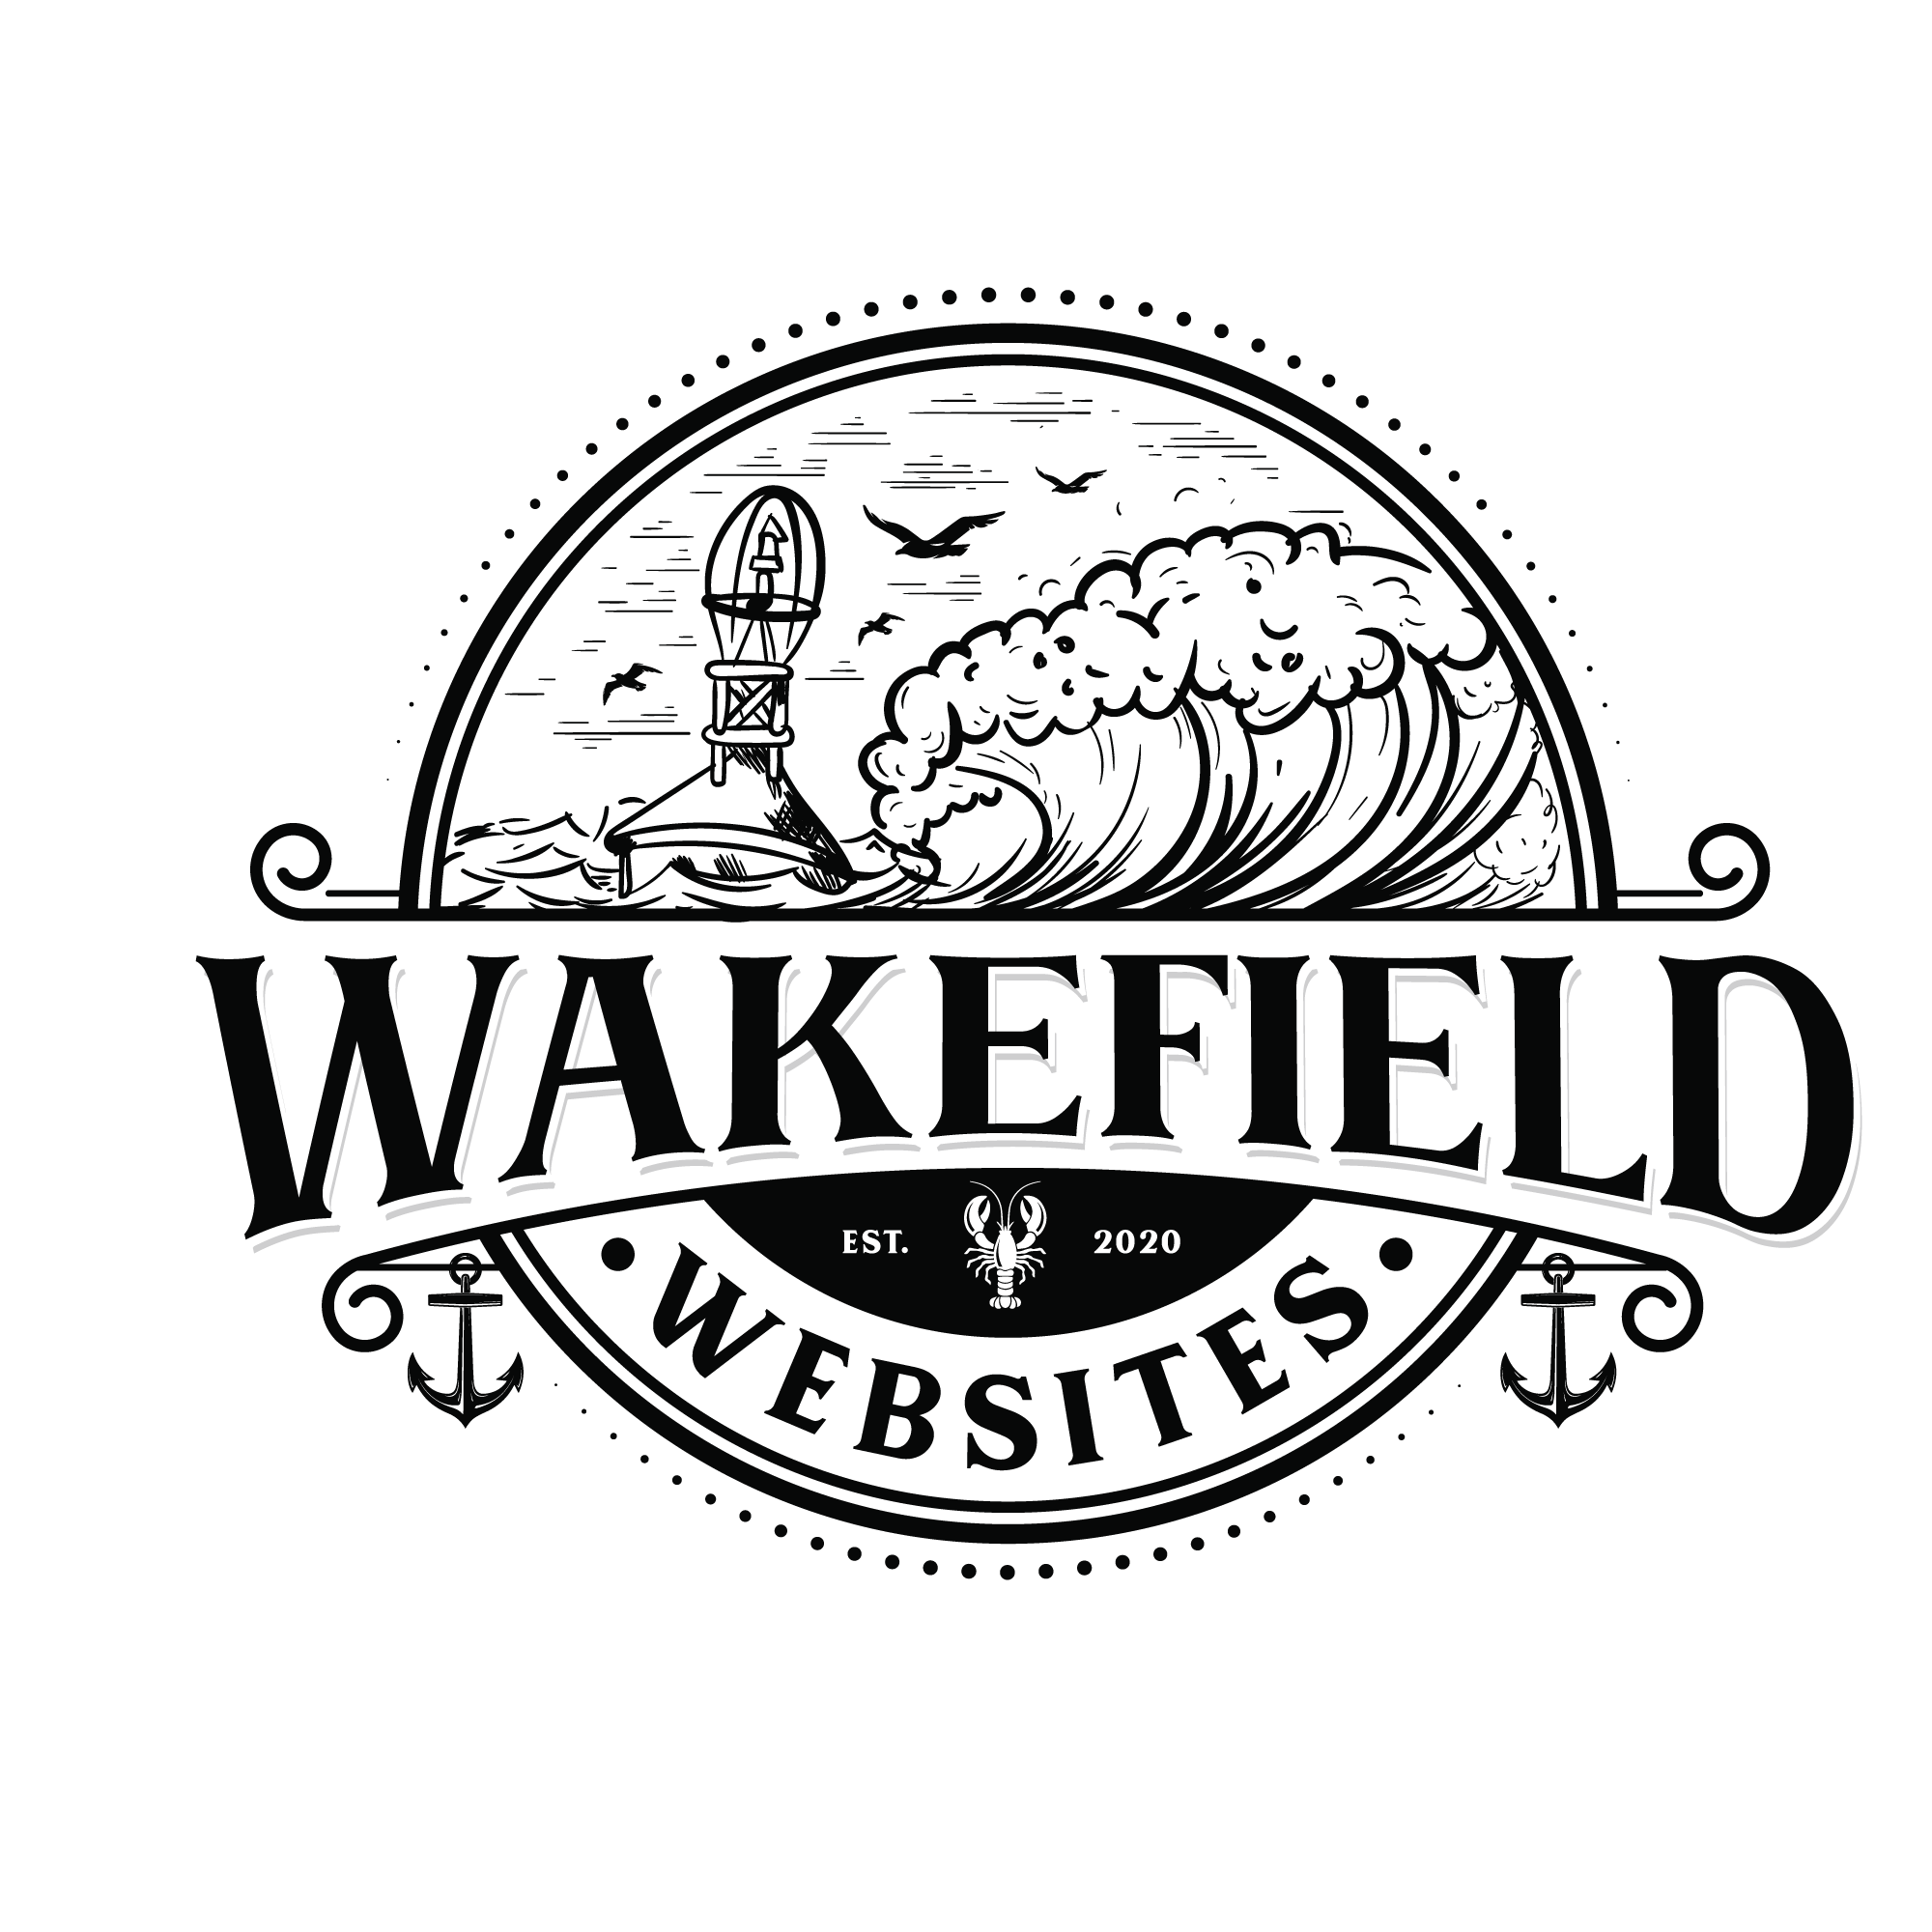 Wakefield Websites